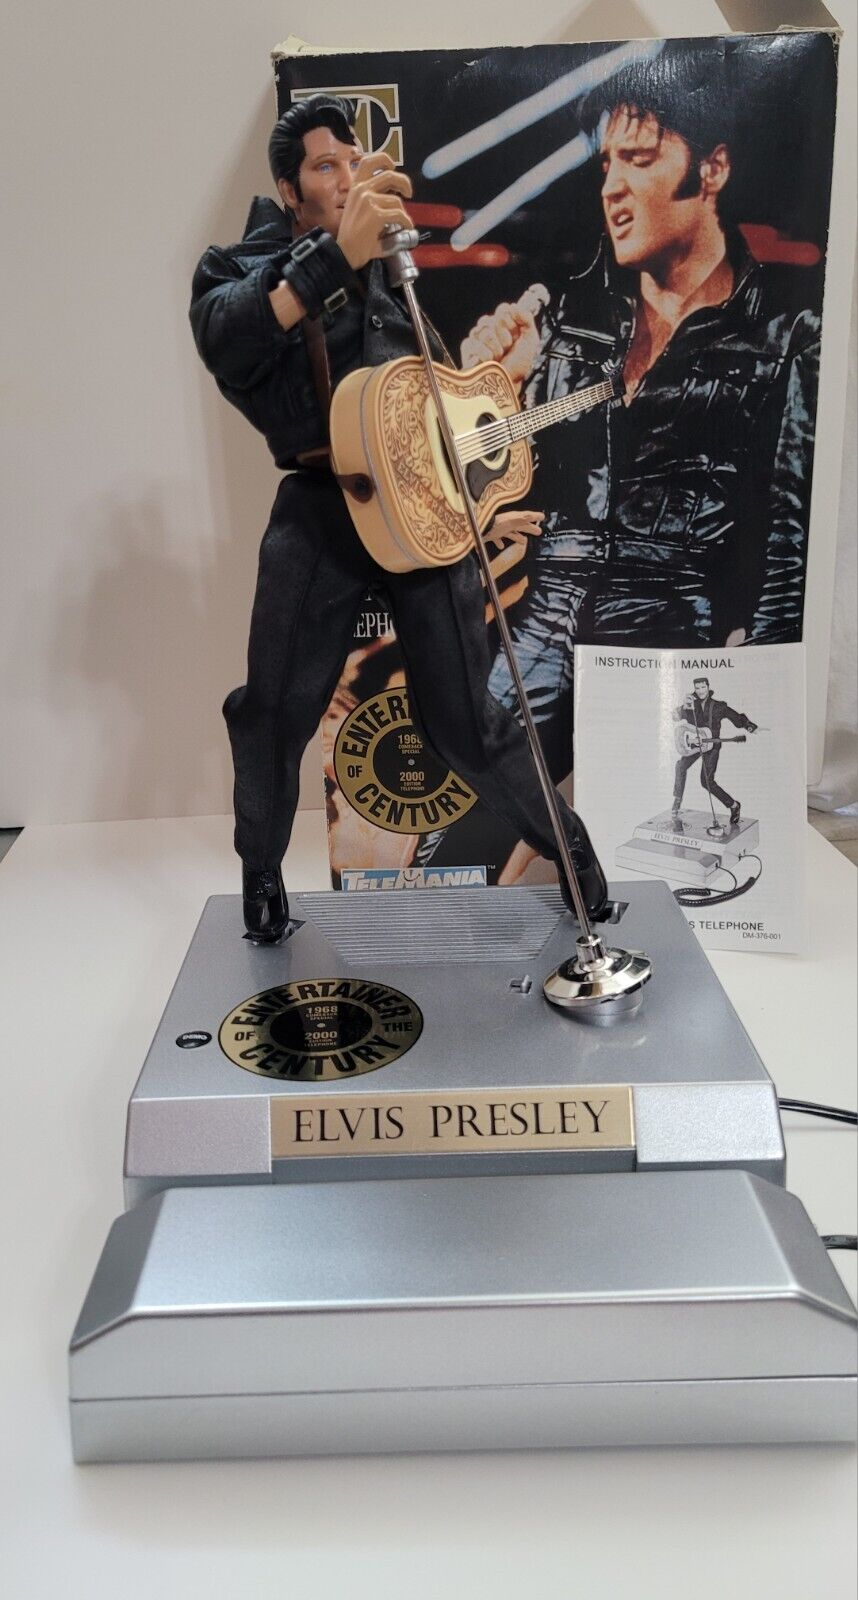 Elvis Presley Singing and Dancing Millennium Telephone Tested Works, See Video